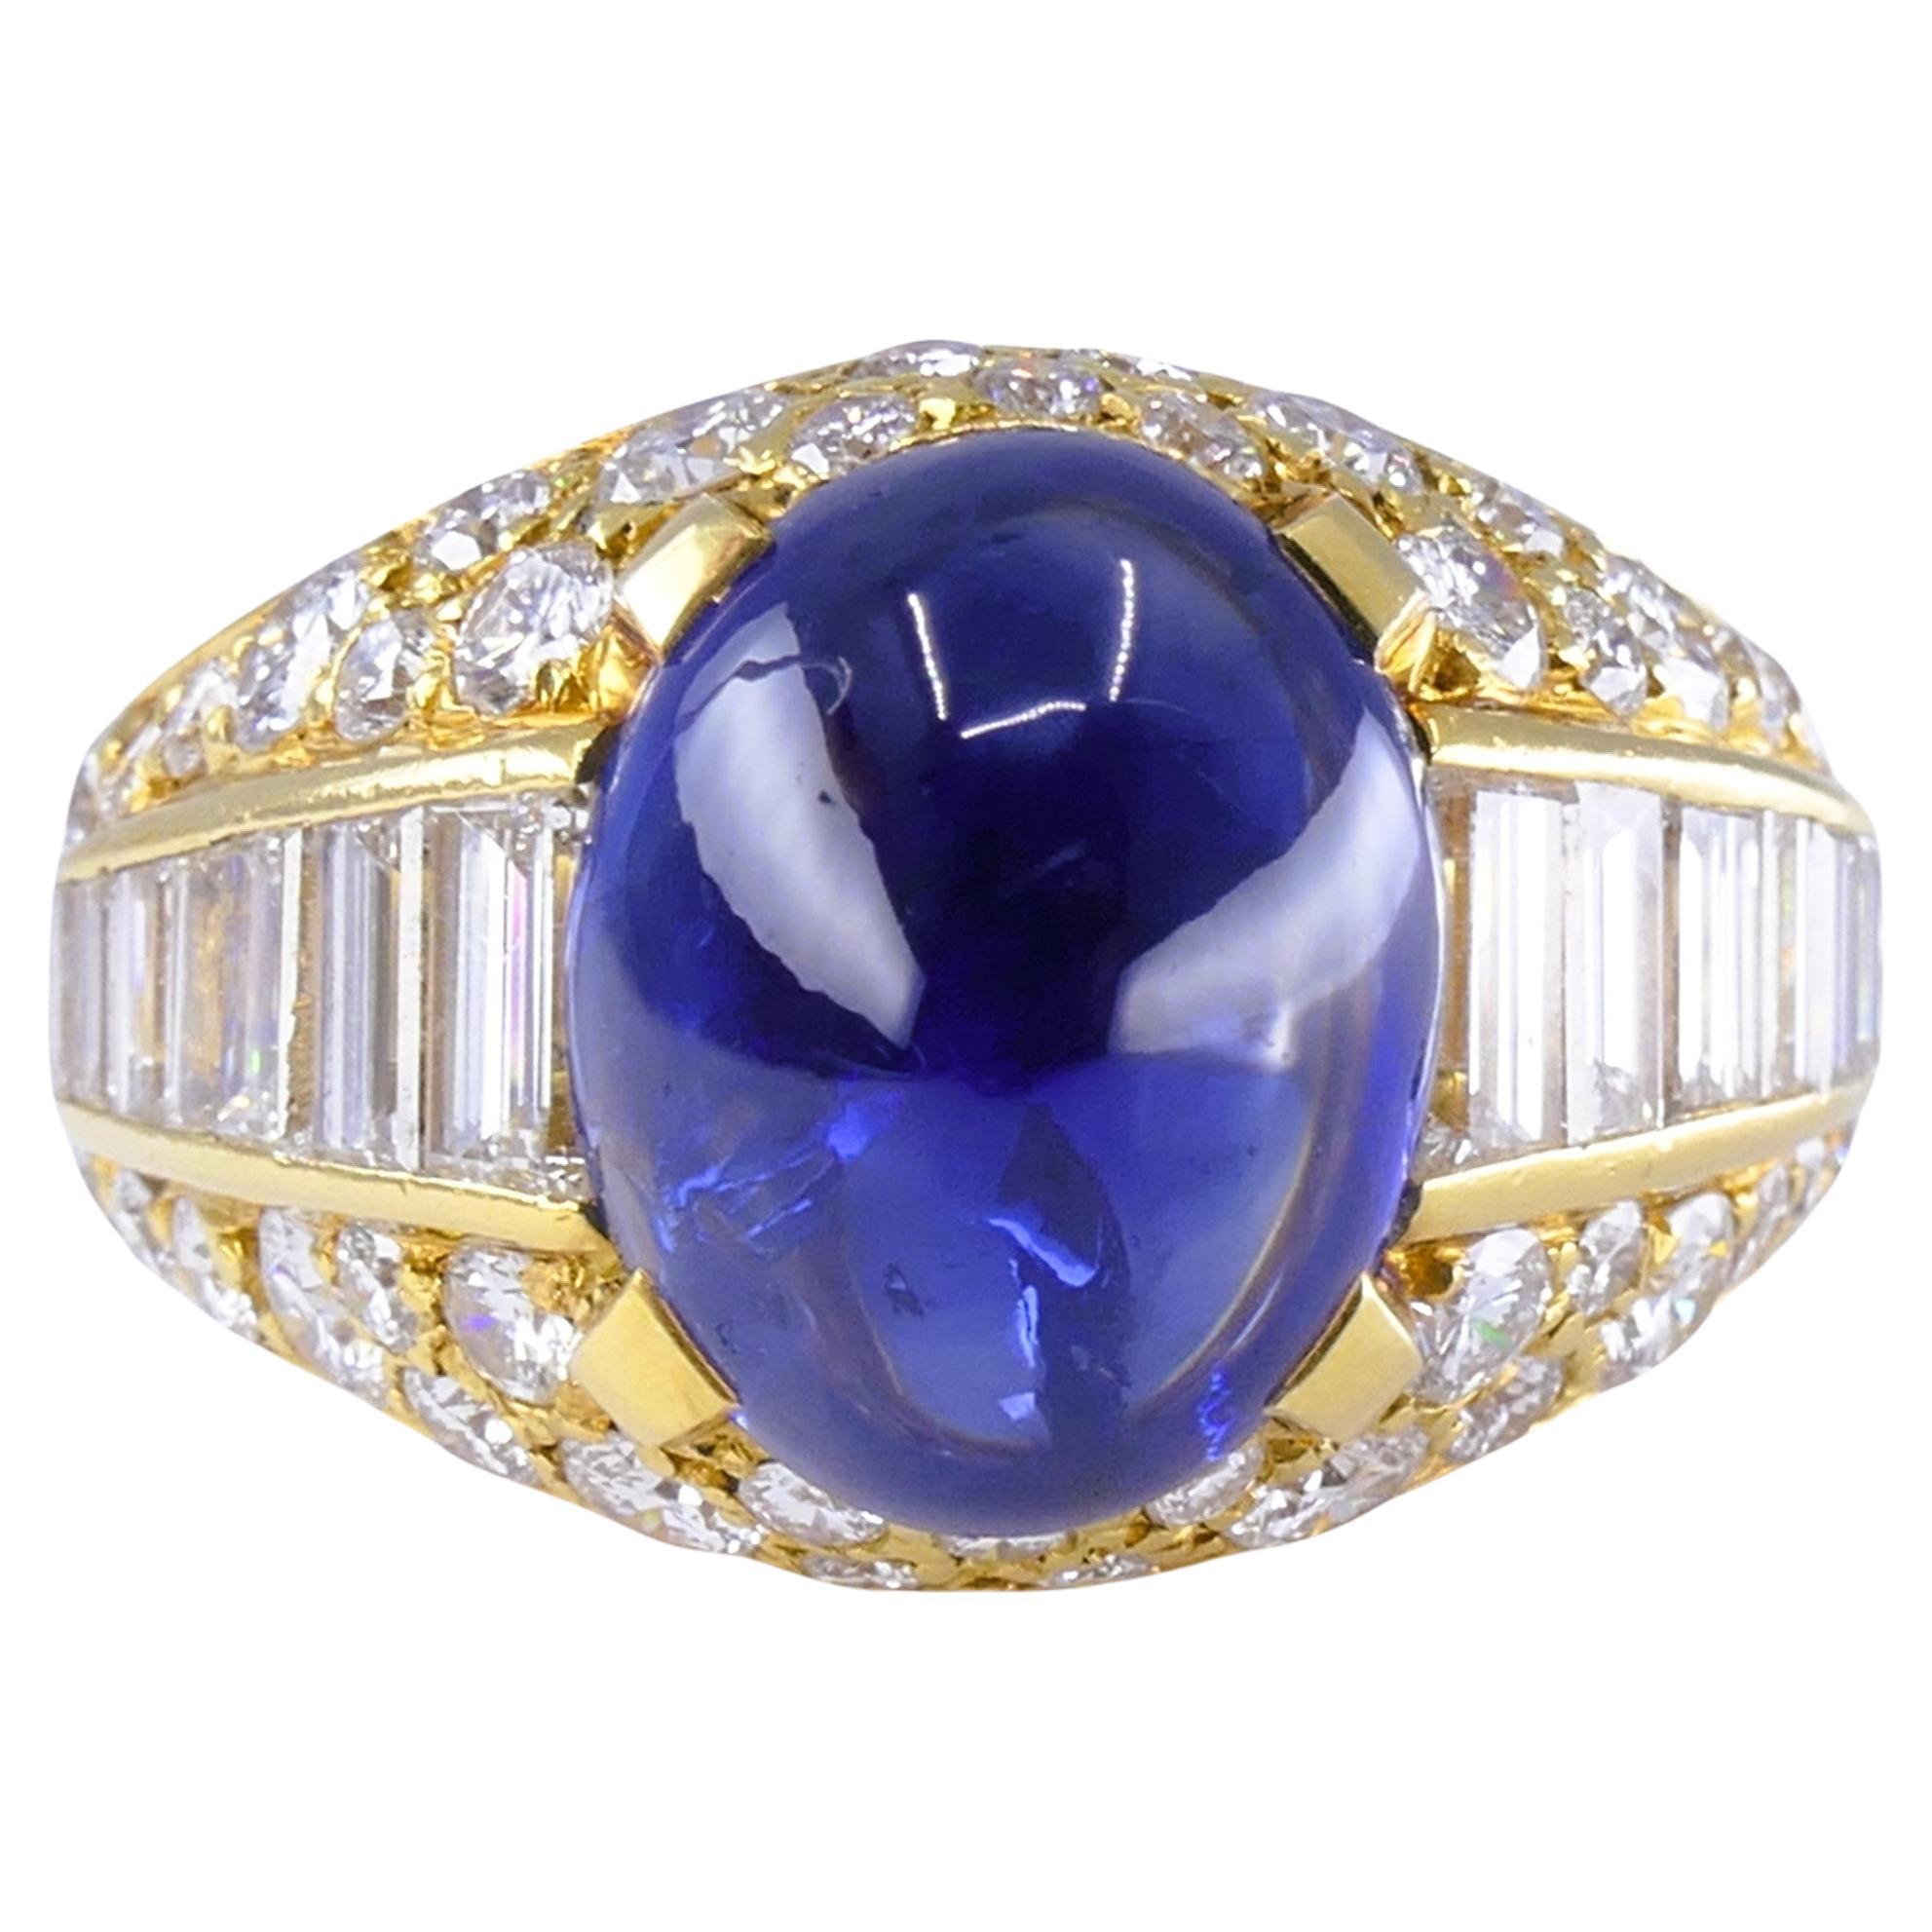 Vintage Bulgari Trombino Ring Sapphire Diamond Gold 18k Estate Jewelry For Sale